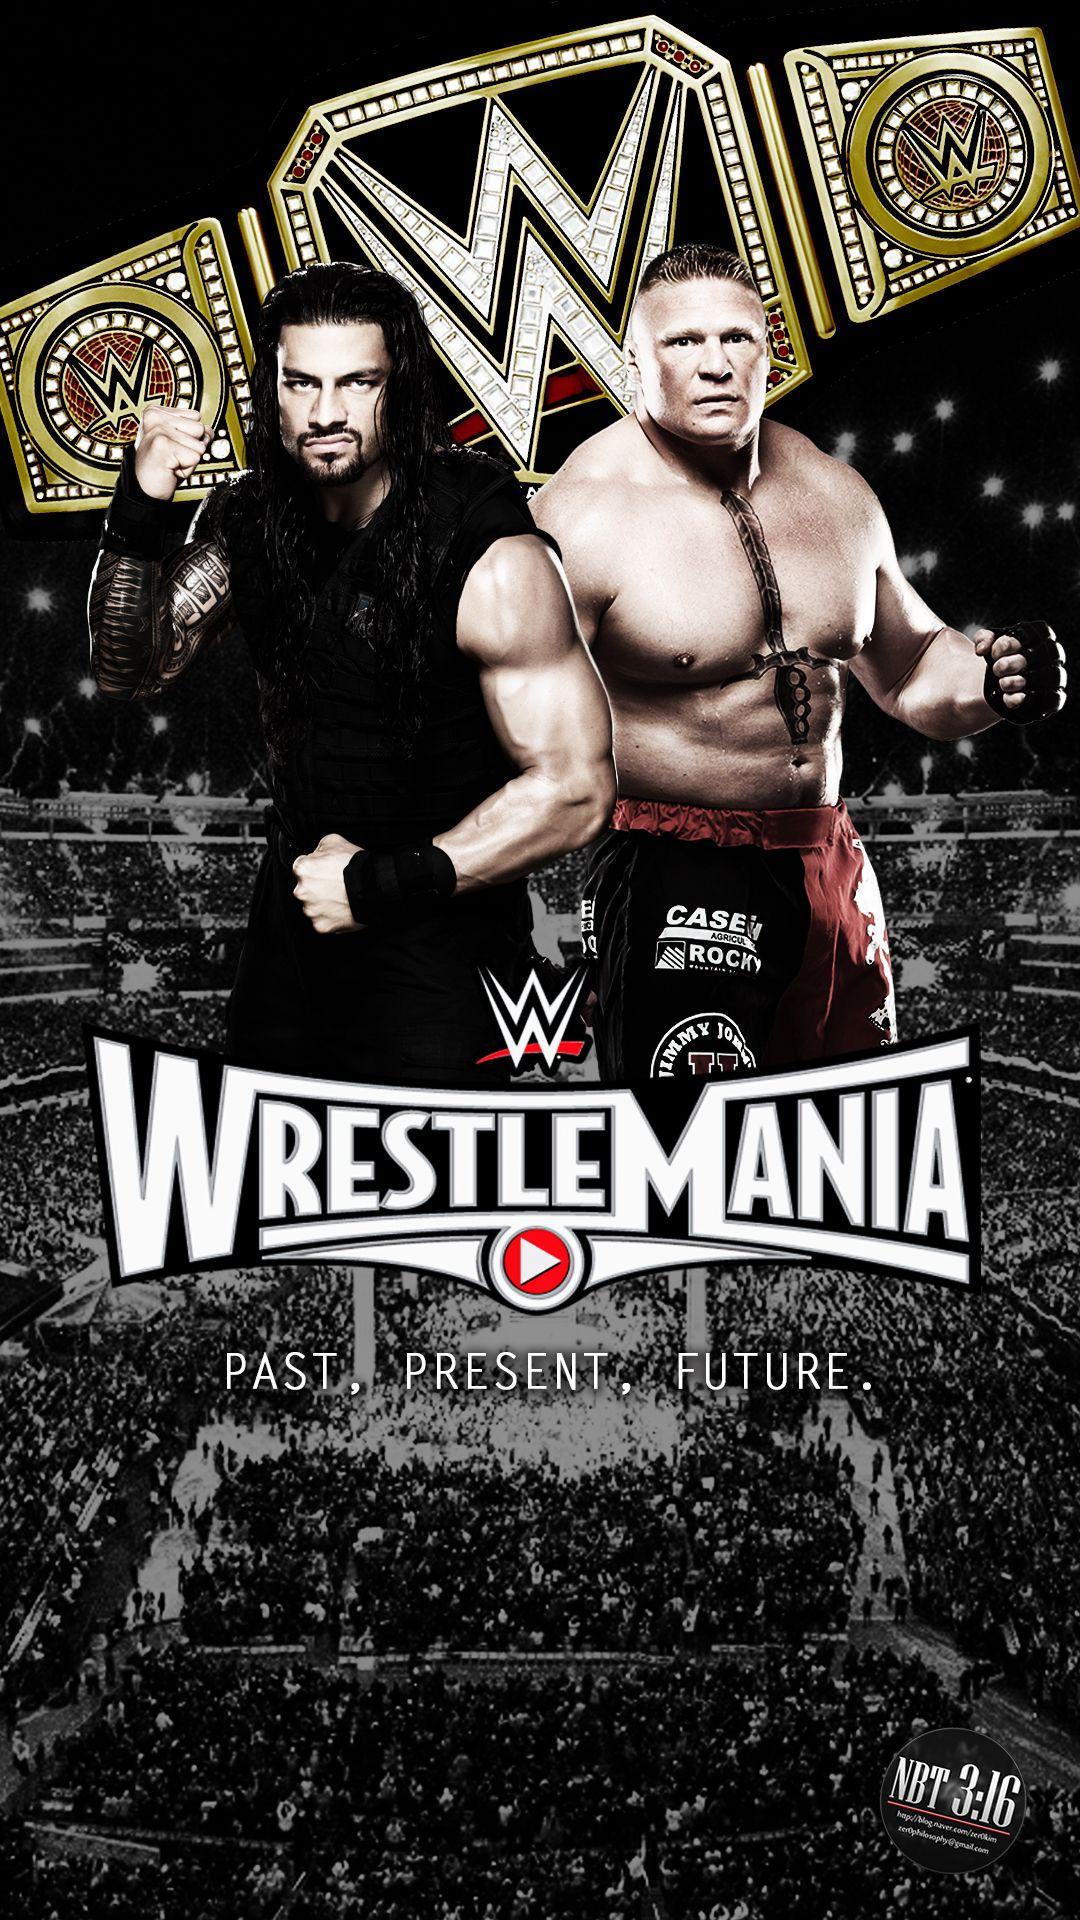 Roman Reigns vs. Brock Lesnar WrestleMania 31